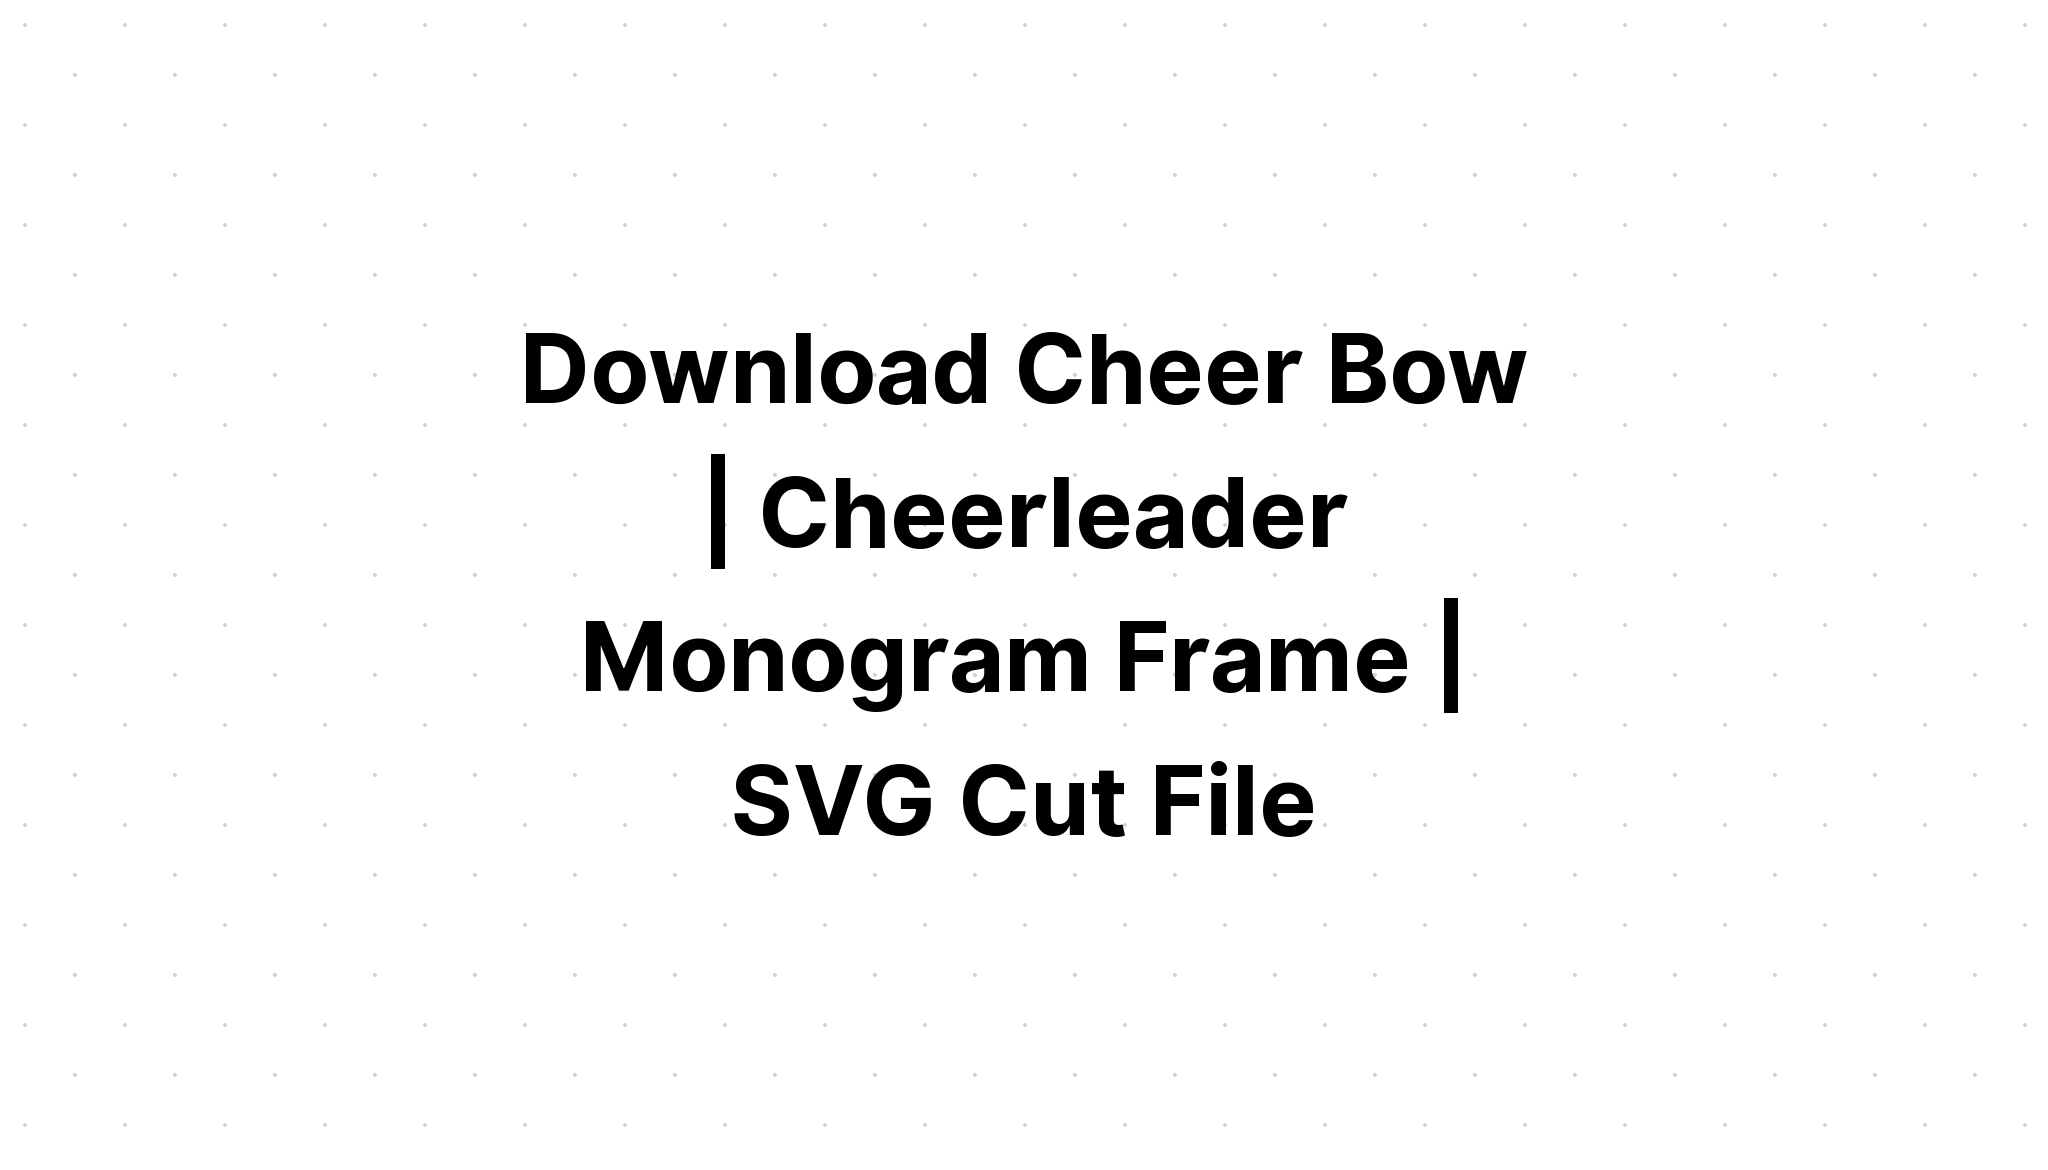 Download Cheerleading Monogram Svg - Layered SVG Cut File